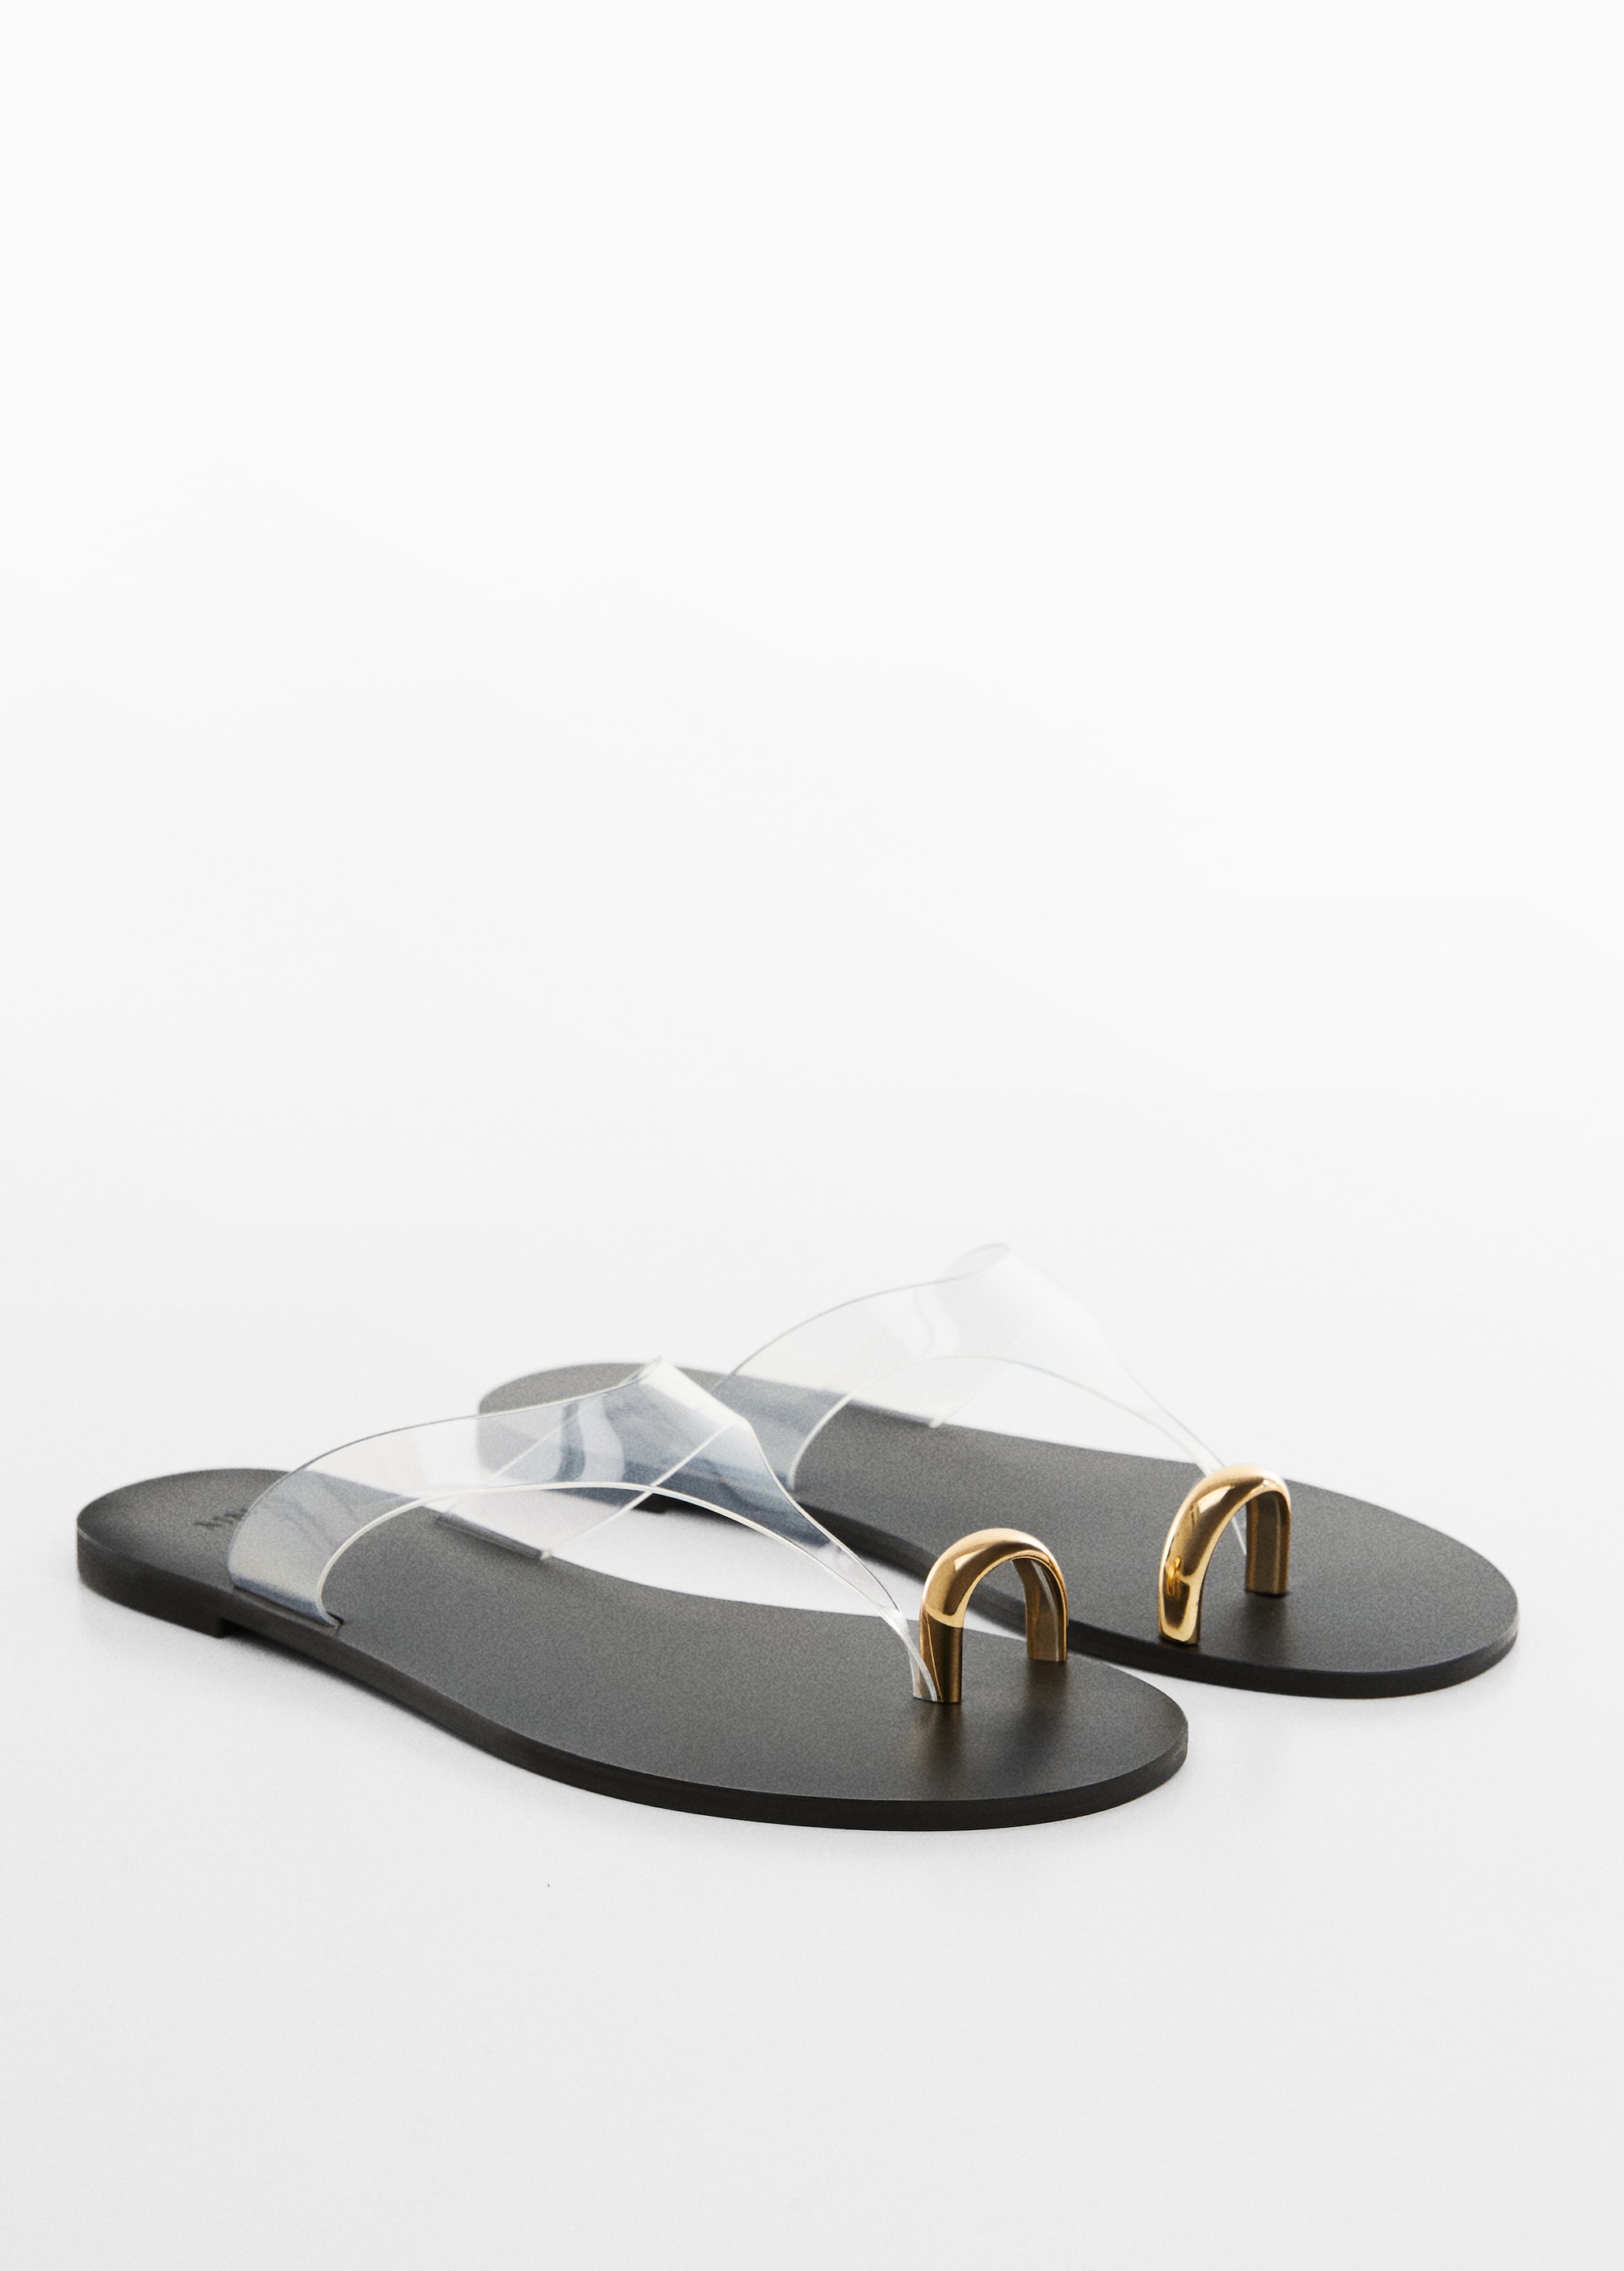 Sandales cuir vinyle - Plan moyen